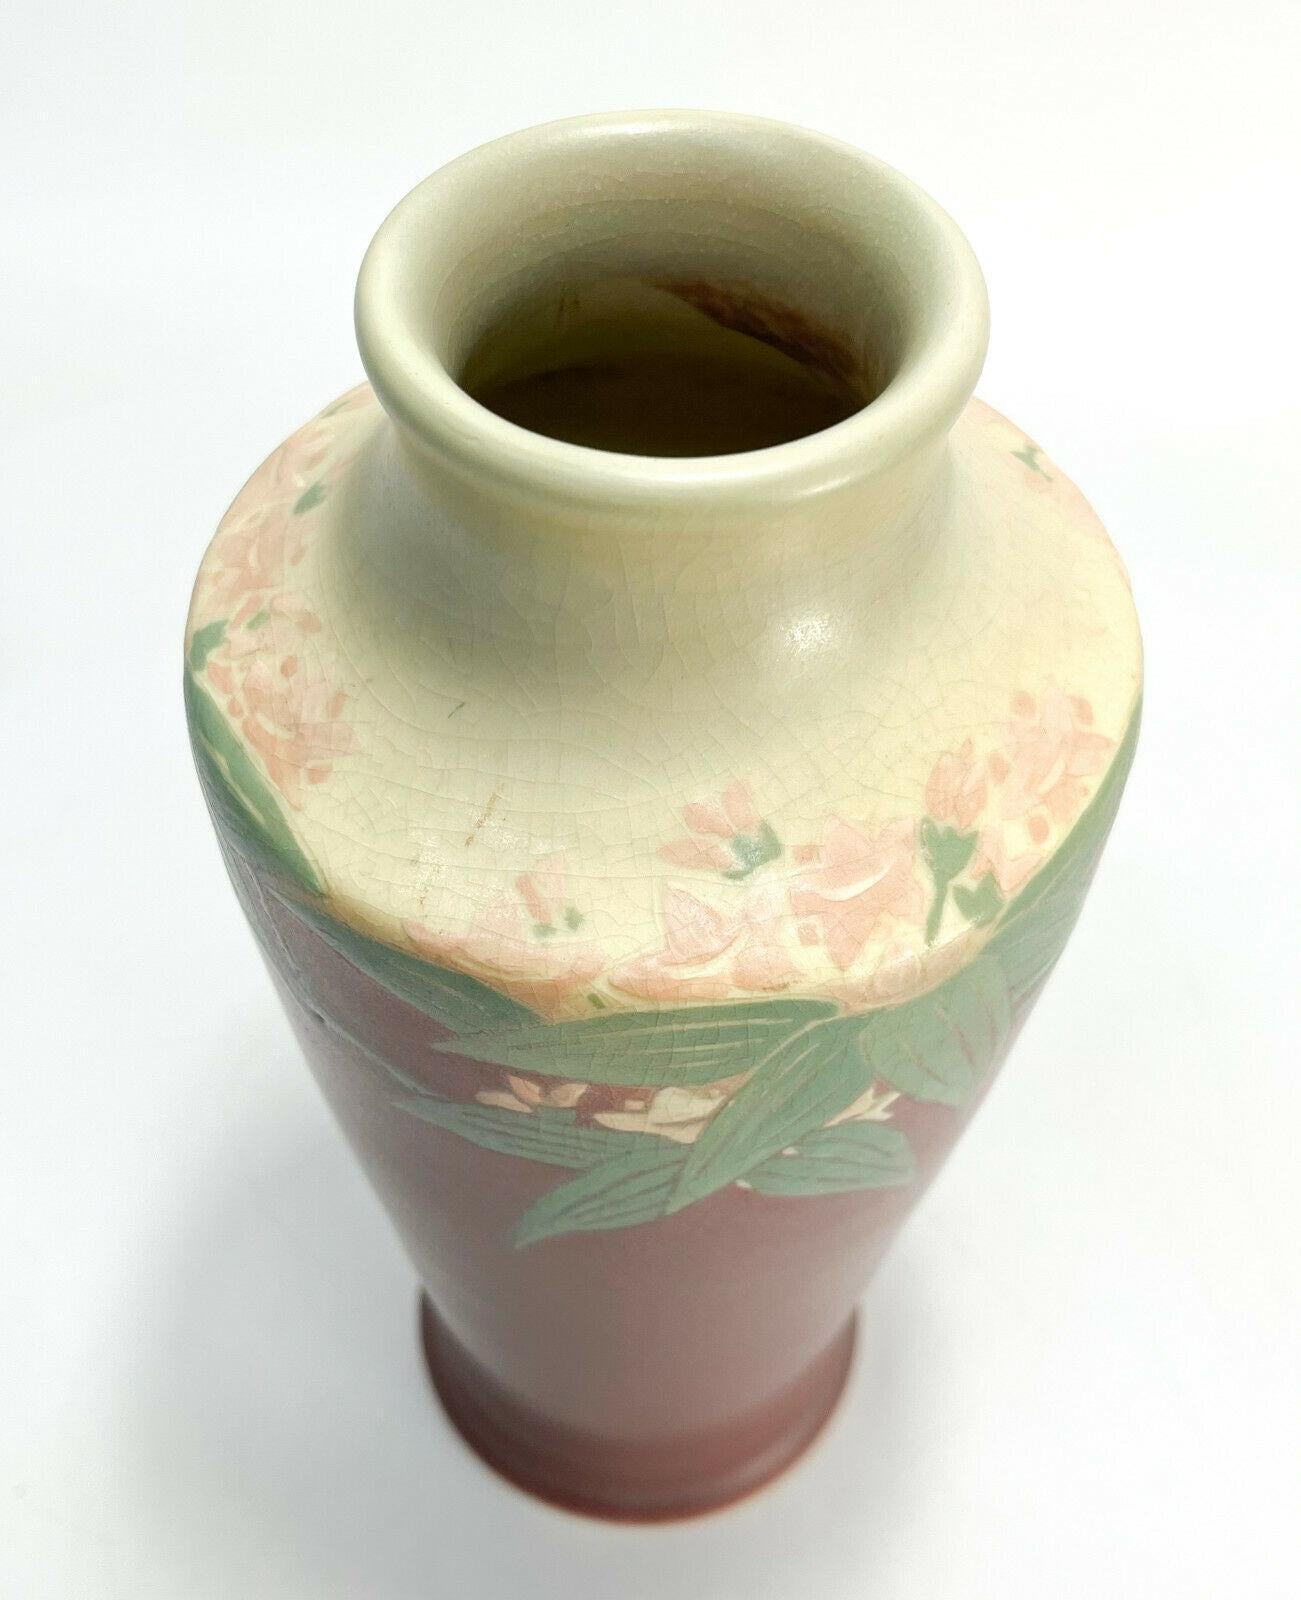 20th Century Rookwood Pottery Vellum Porcelain Vase #1920 by Lorinda Epply, 1912